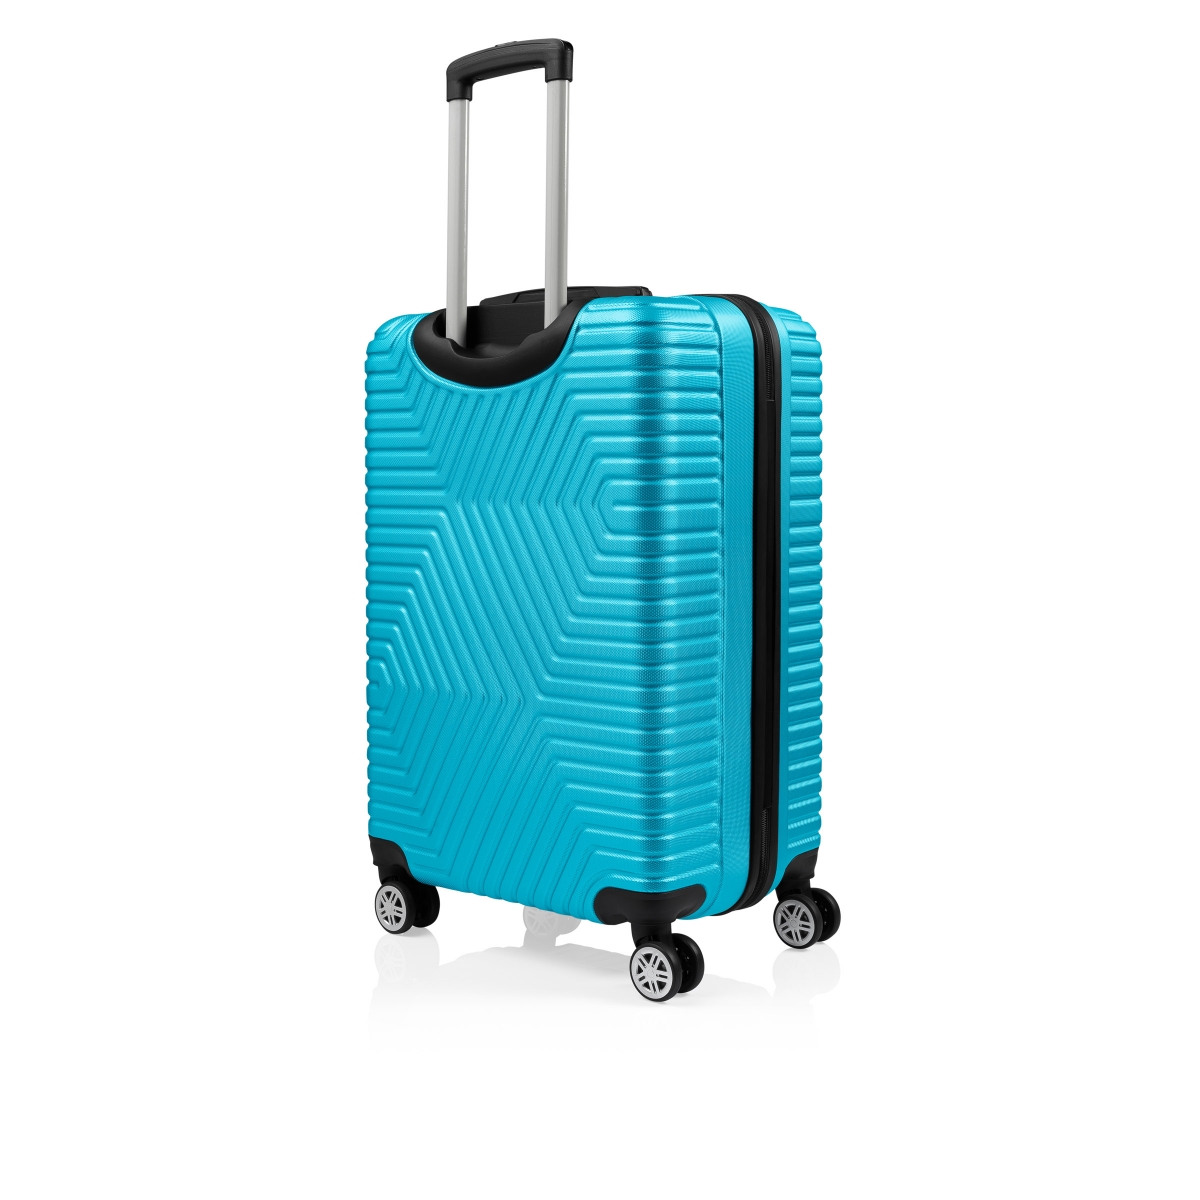 G&D Polo Suitcase ABS 3'lü Lüx Valiz Seyahat Seti - Model:600.16 Turkuaz